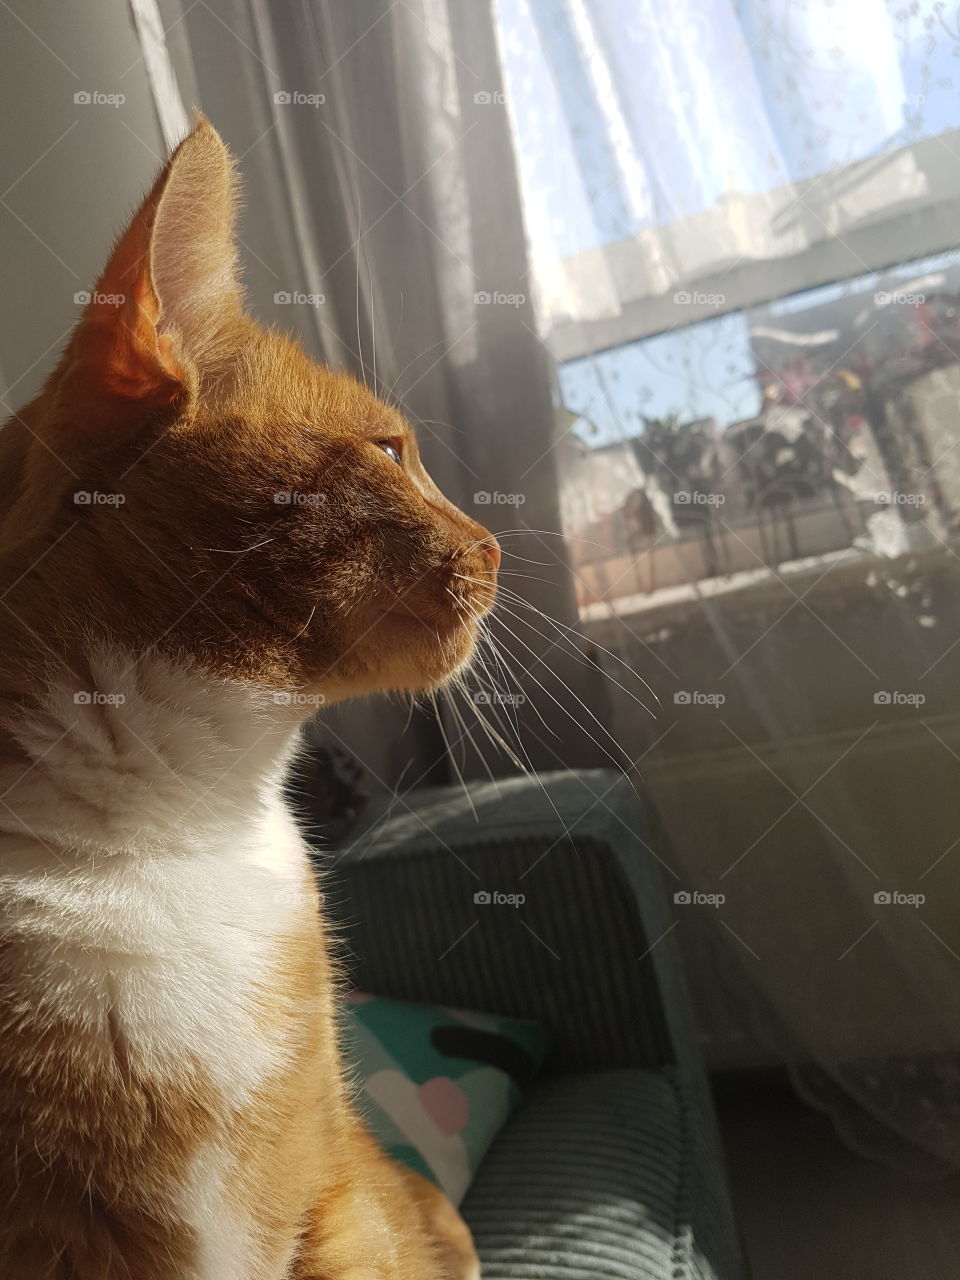 my red cat enjoying himself in the sun.